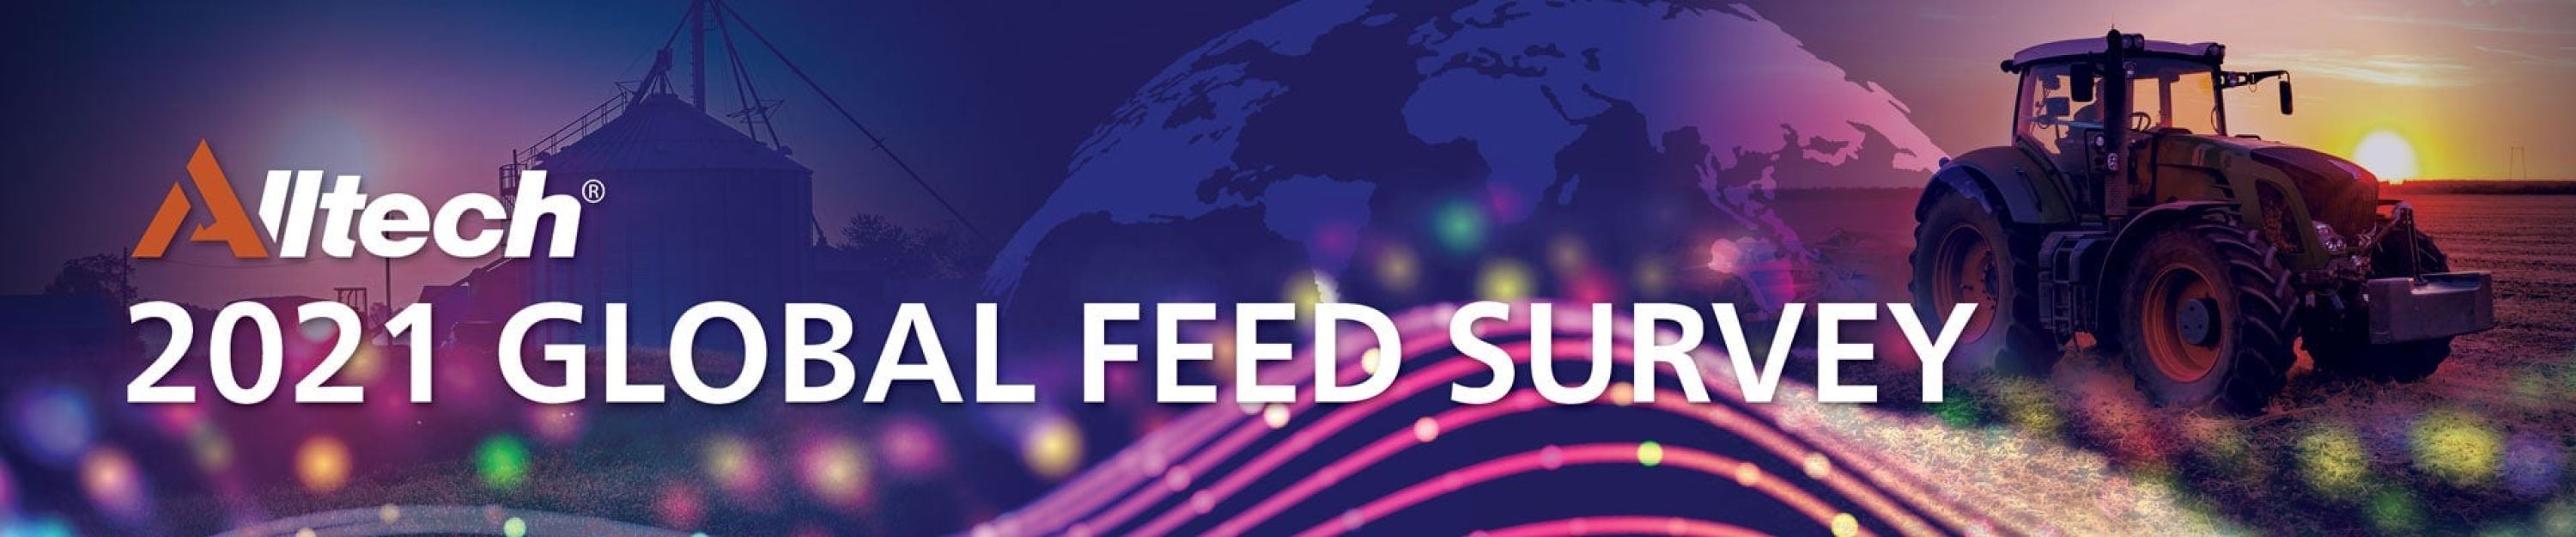 2021 Global Feed Survey header image